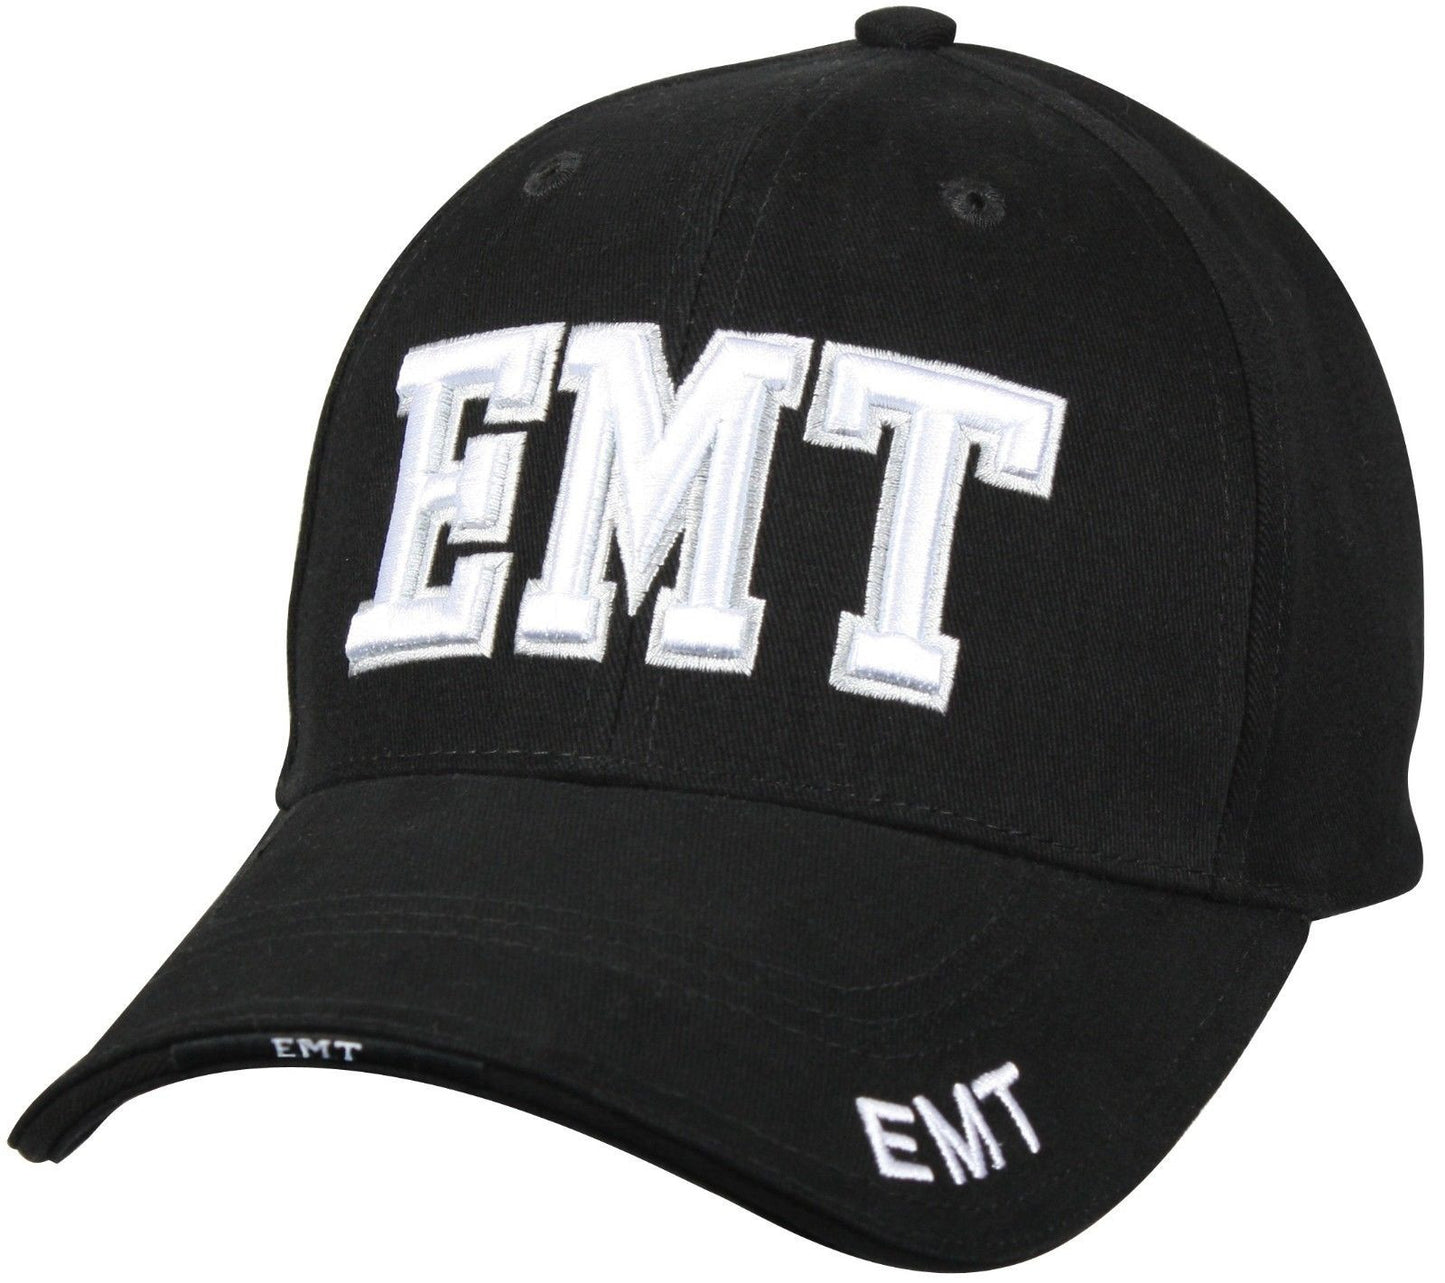 "E.M.T" - Black - Deluxe Low Profile Baseball Cap